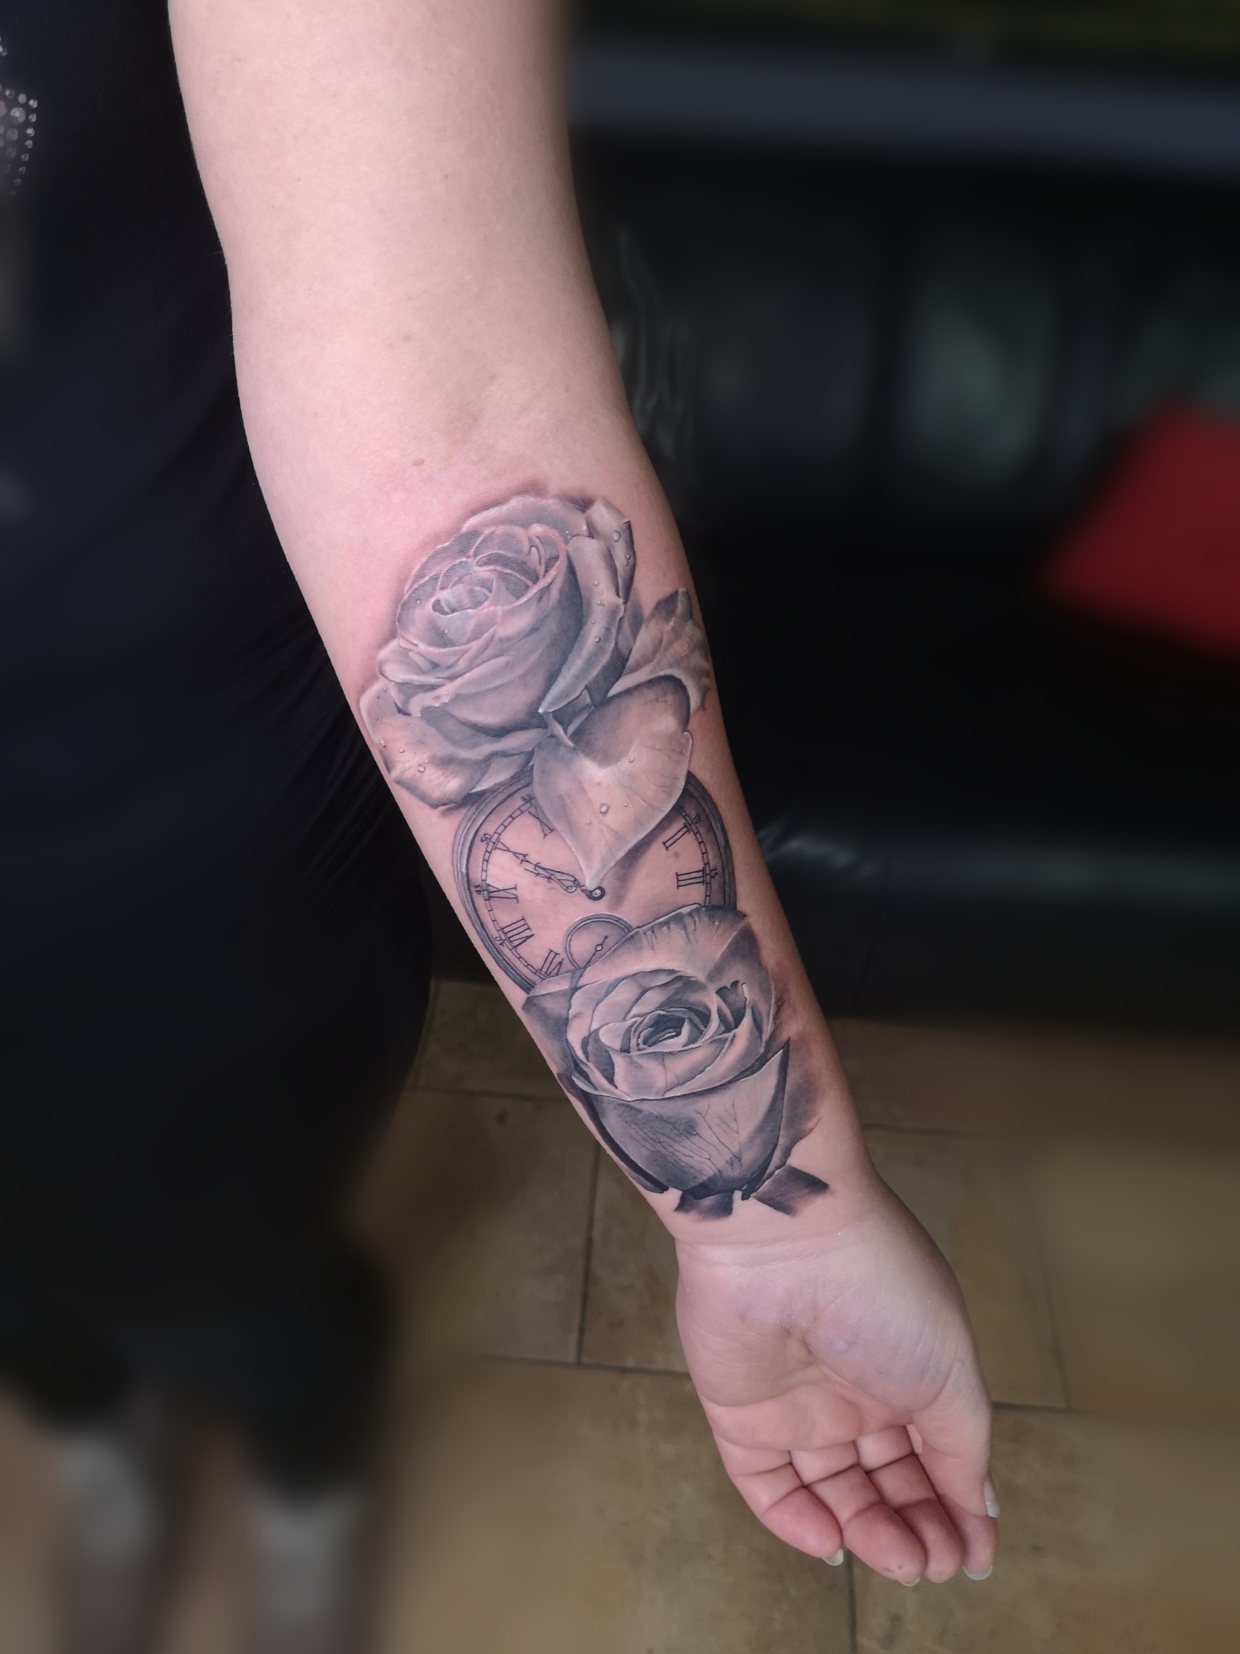 Rose / sleeve in progress / Black and gray / Tattoo / Realistic / Terminbuchung